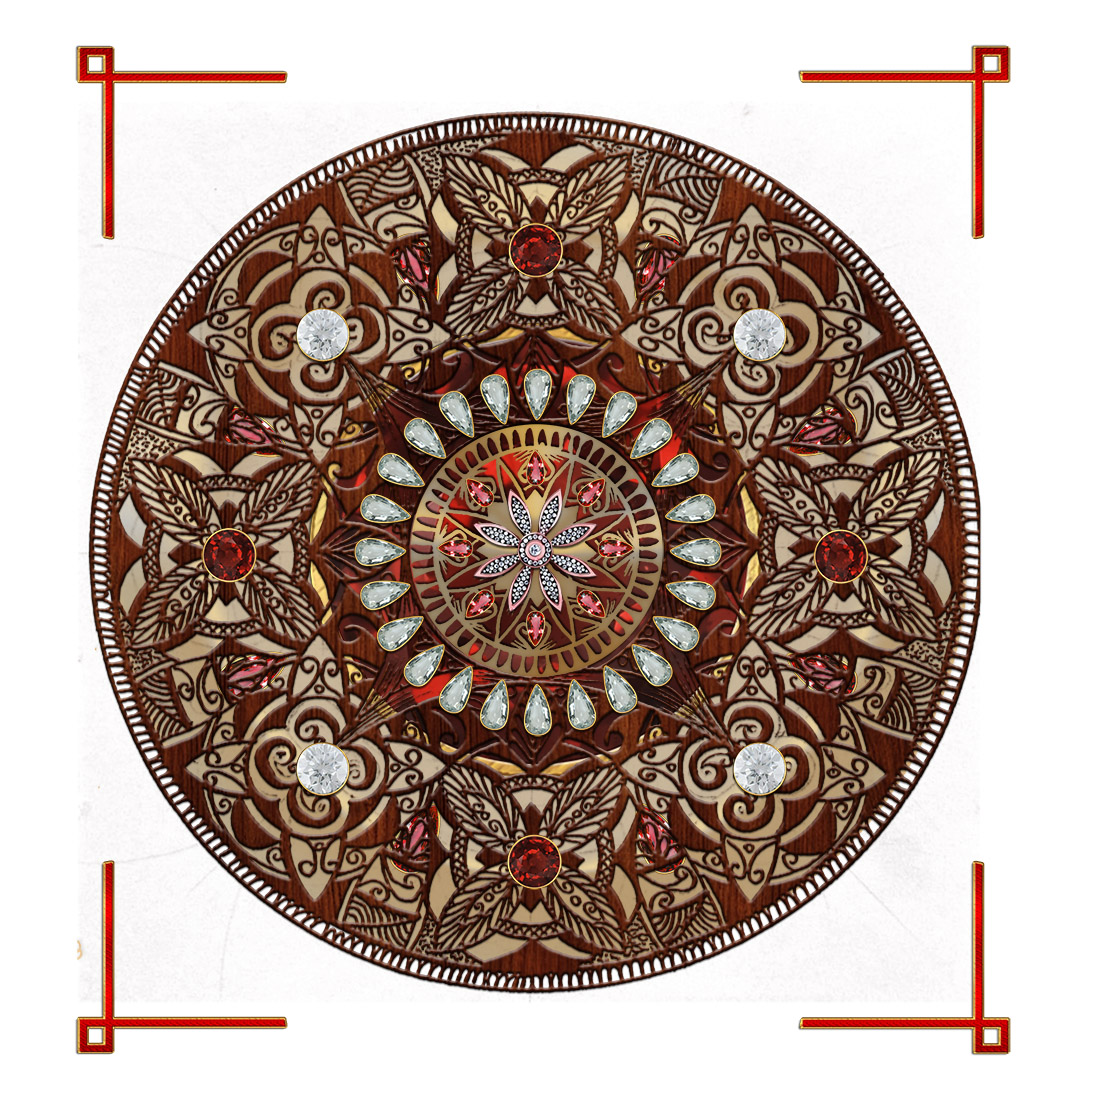 Beautiful Layered Mandala 100% Editable cover image.